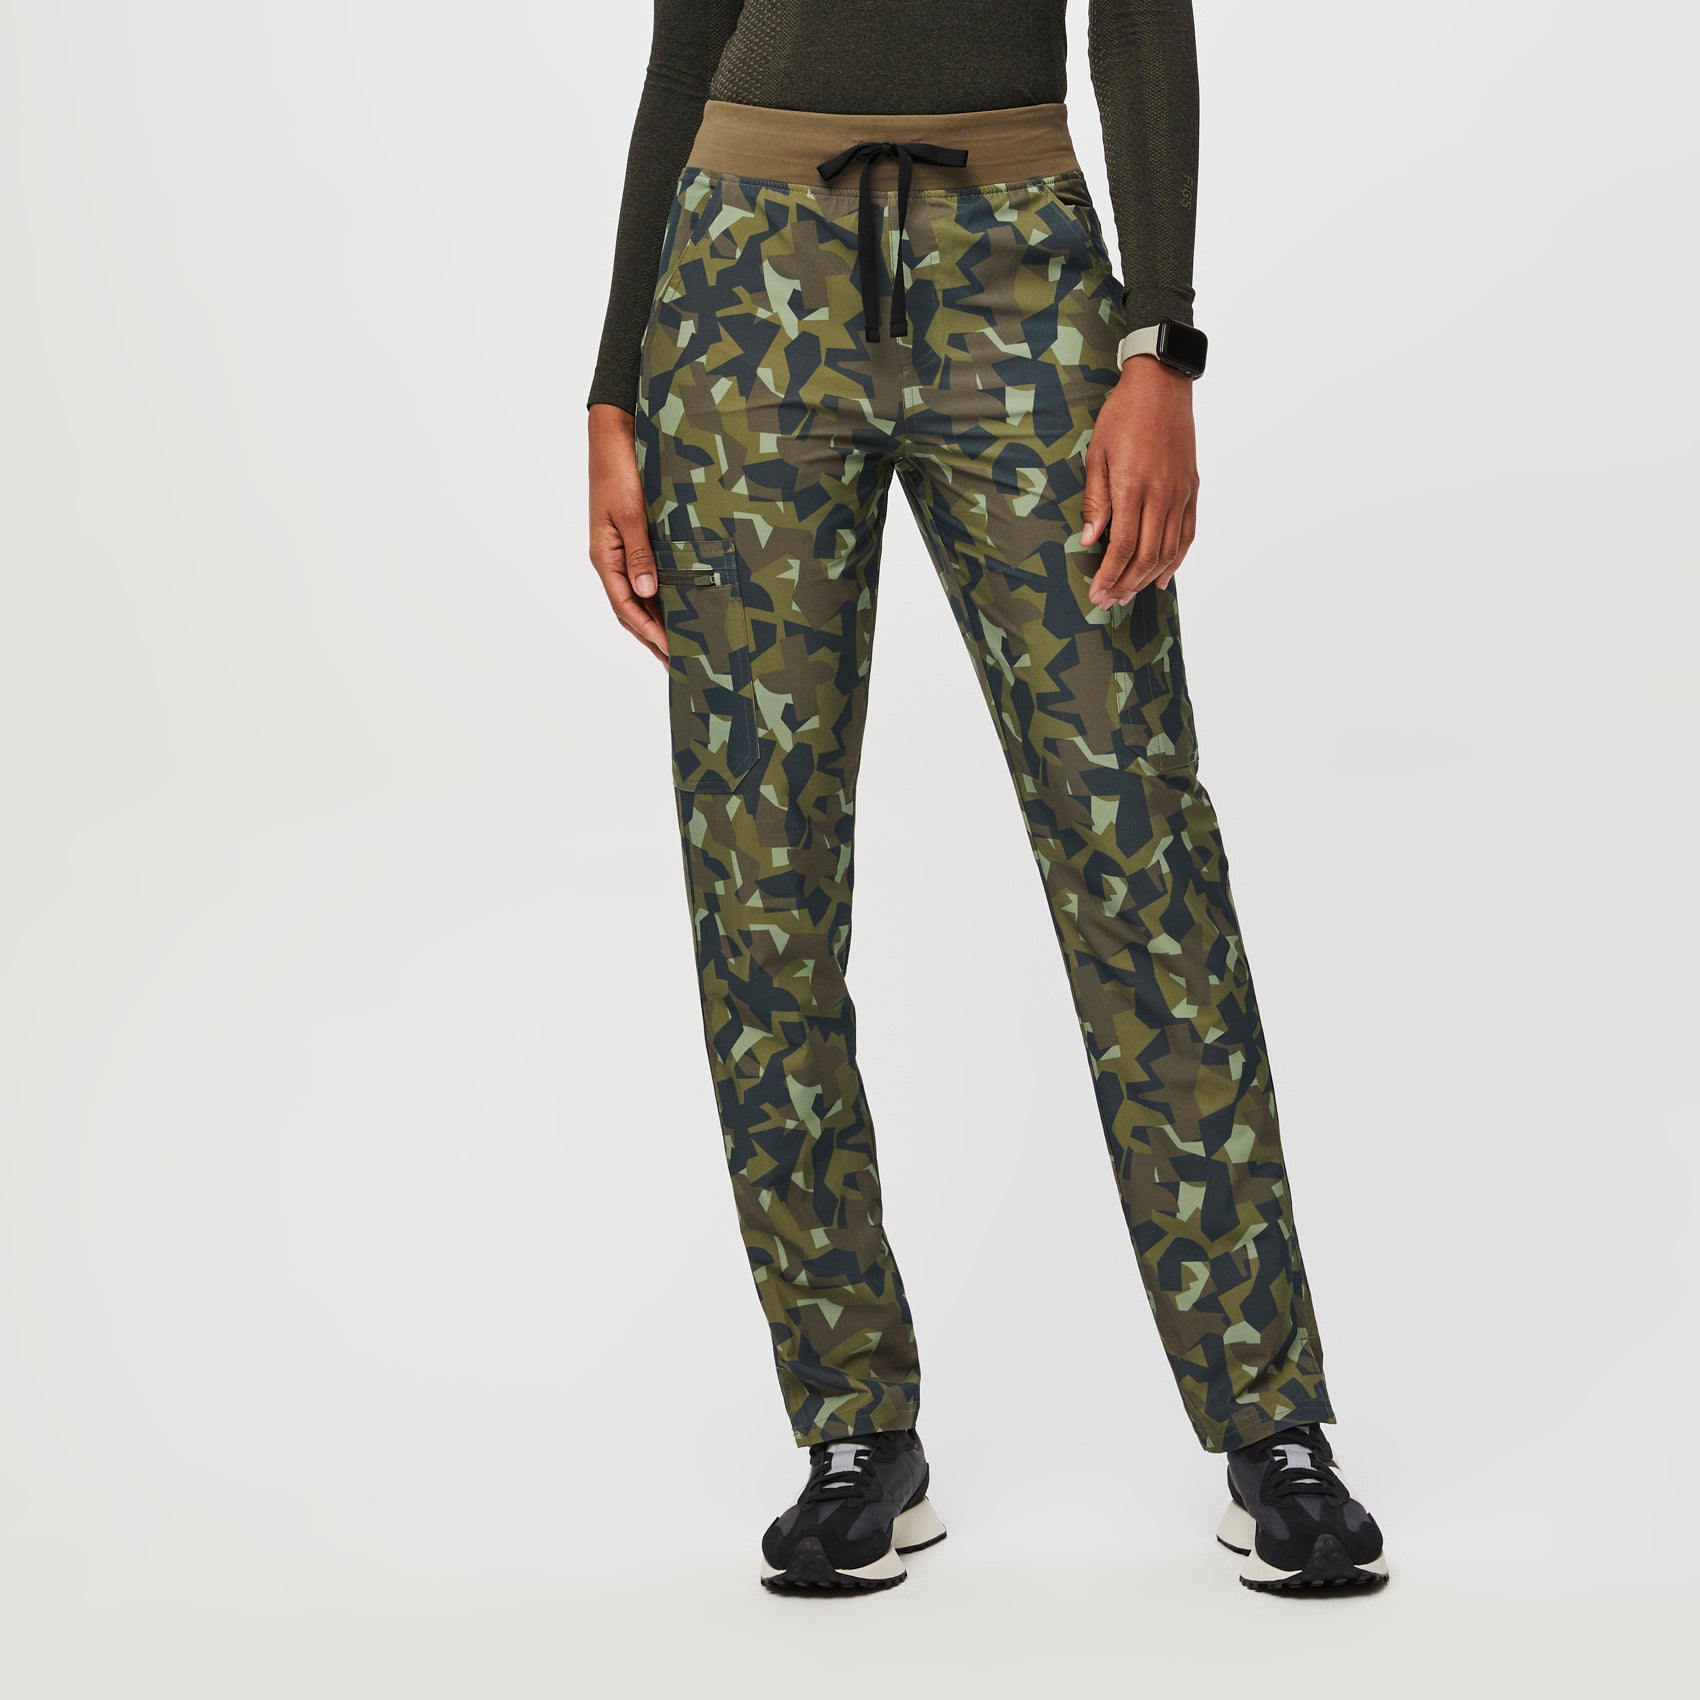  Pants for Women High Waist,Women's Camouflage Jogger